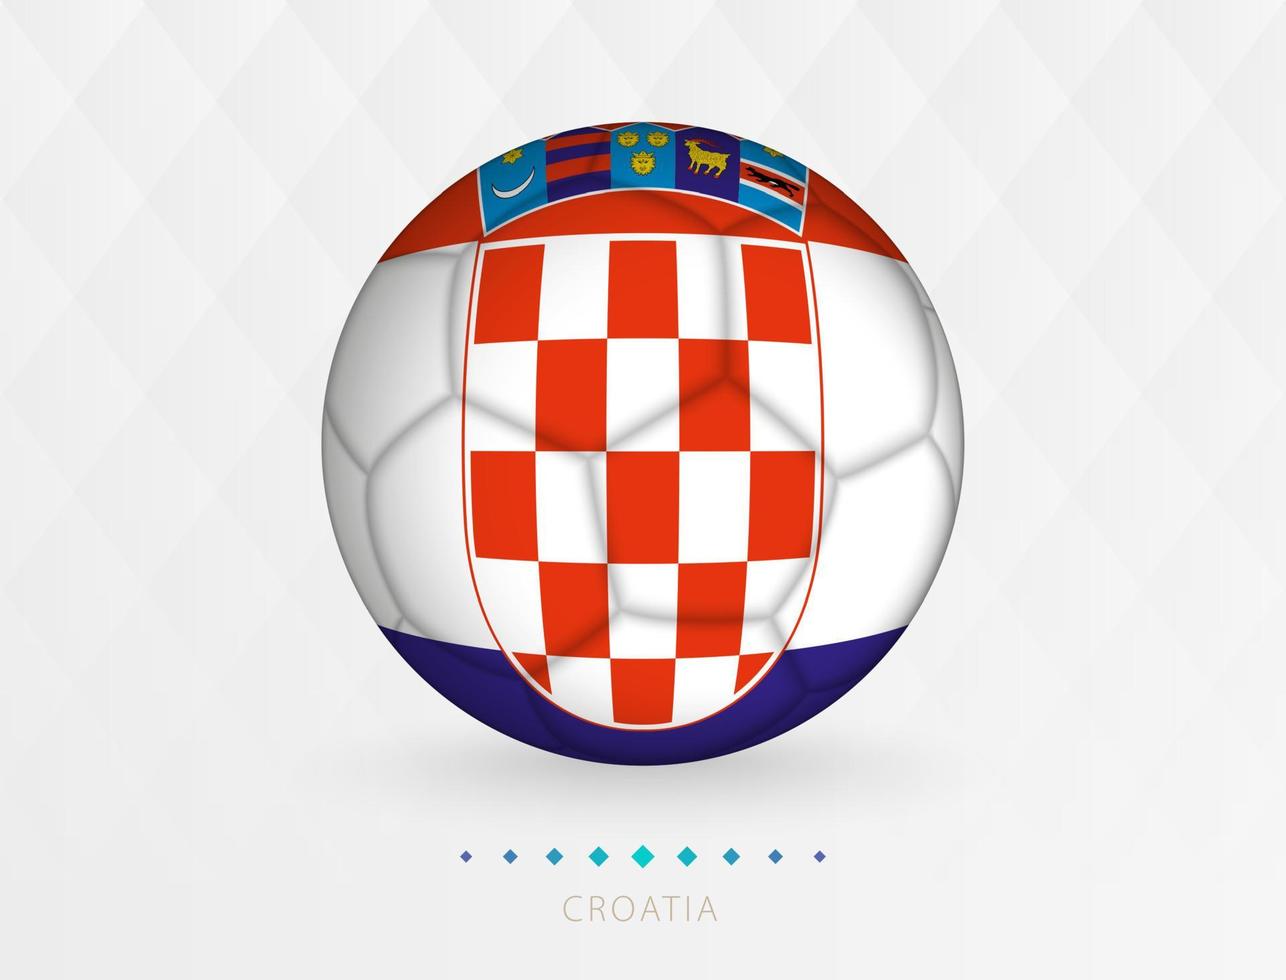 Football ball with Croatia flag pattern, soccer ball with flag of Croatia national team. vector